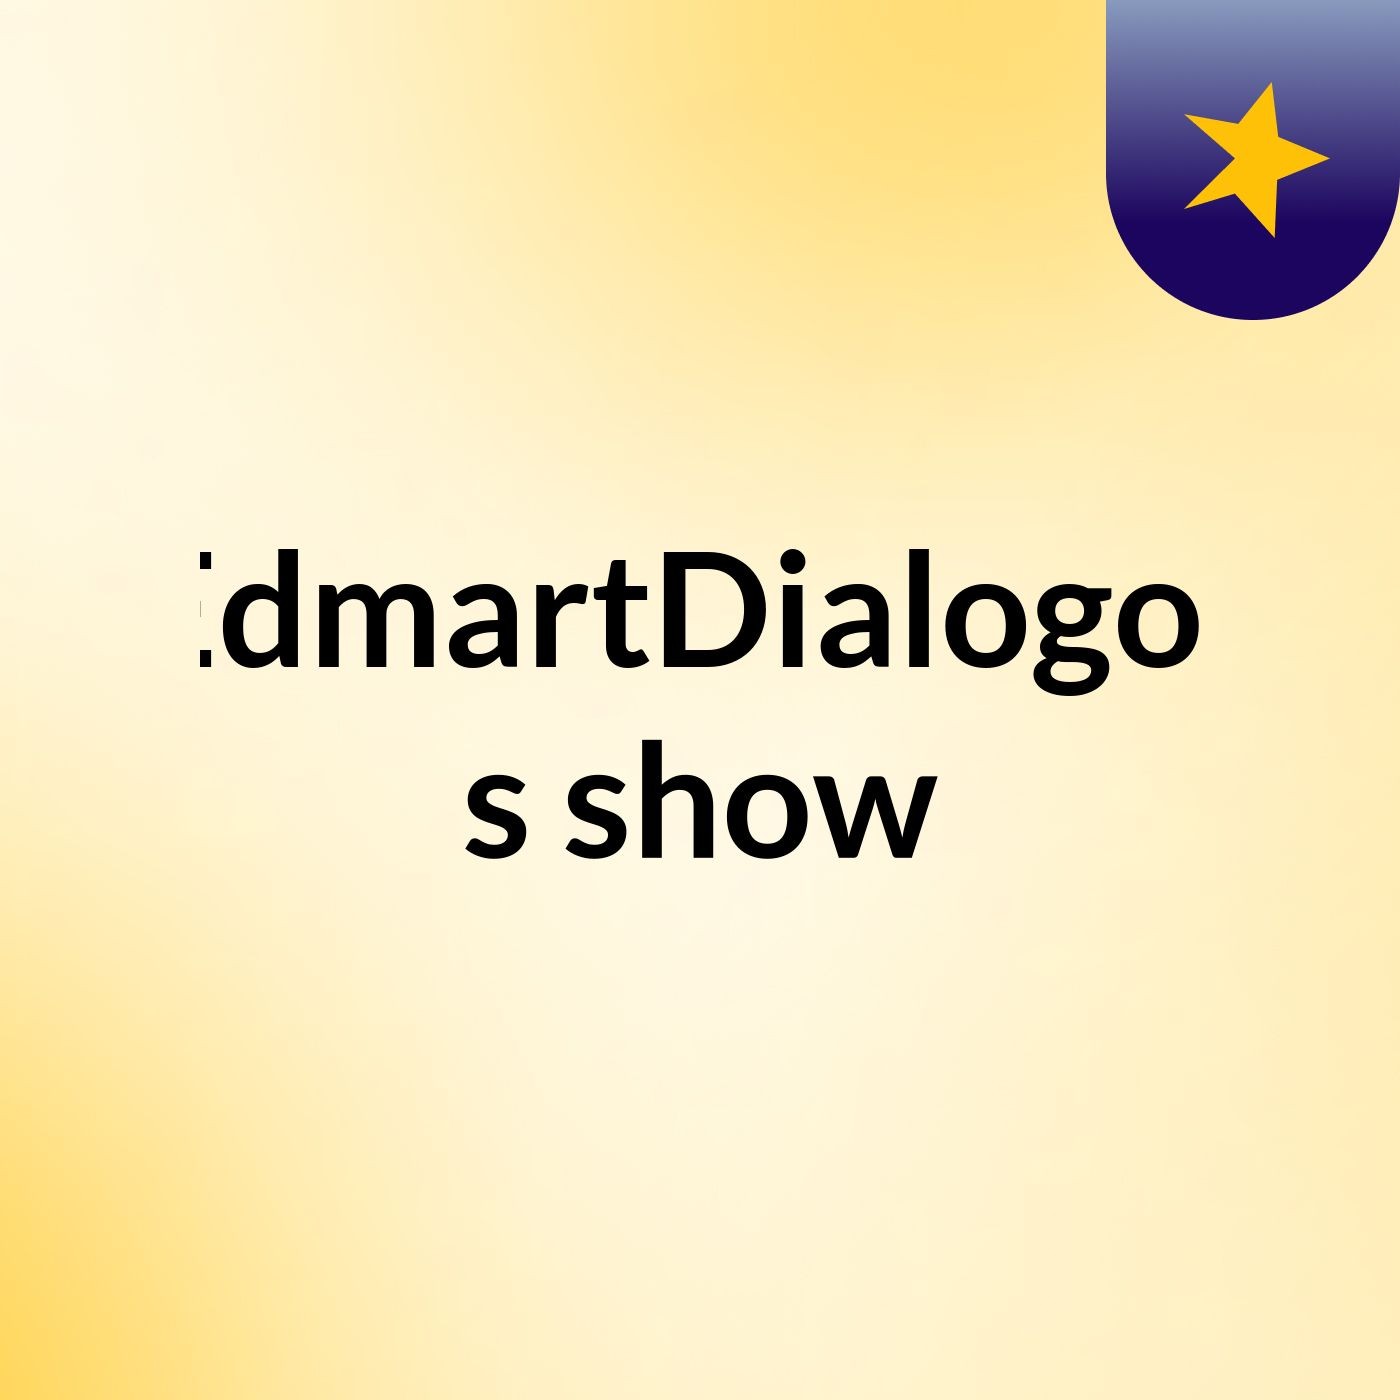 EdmartDialogos's show